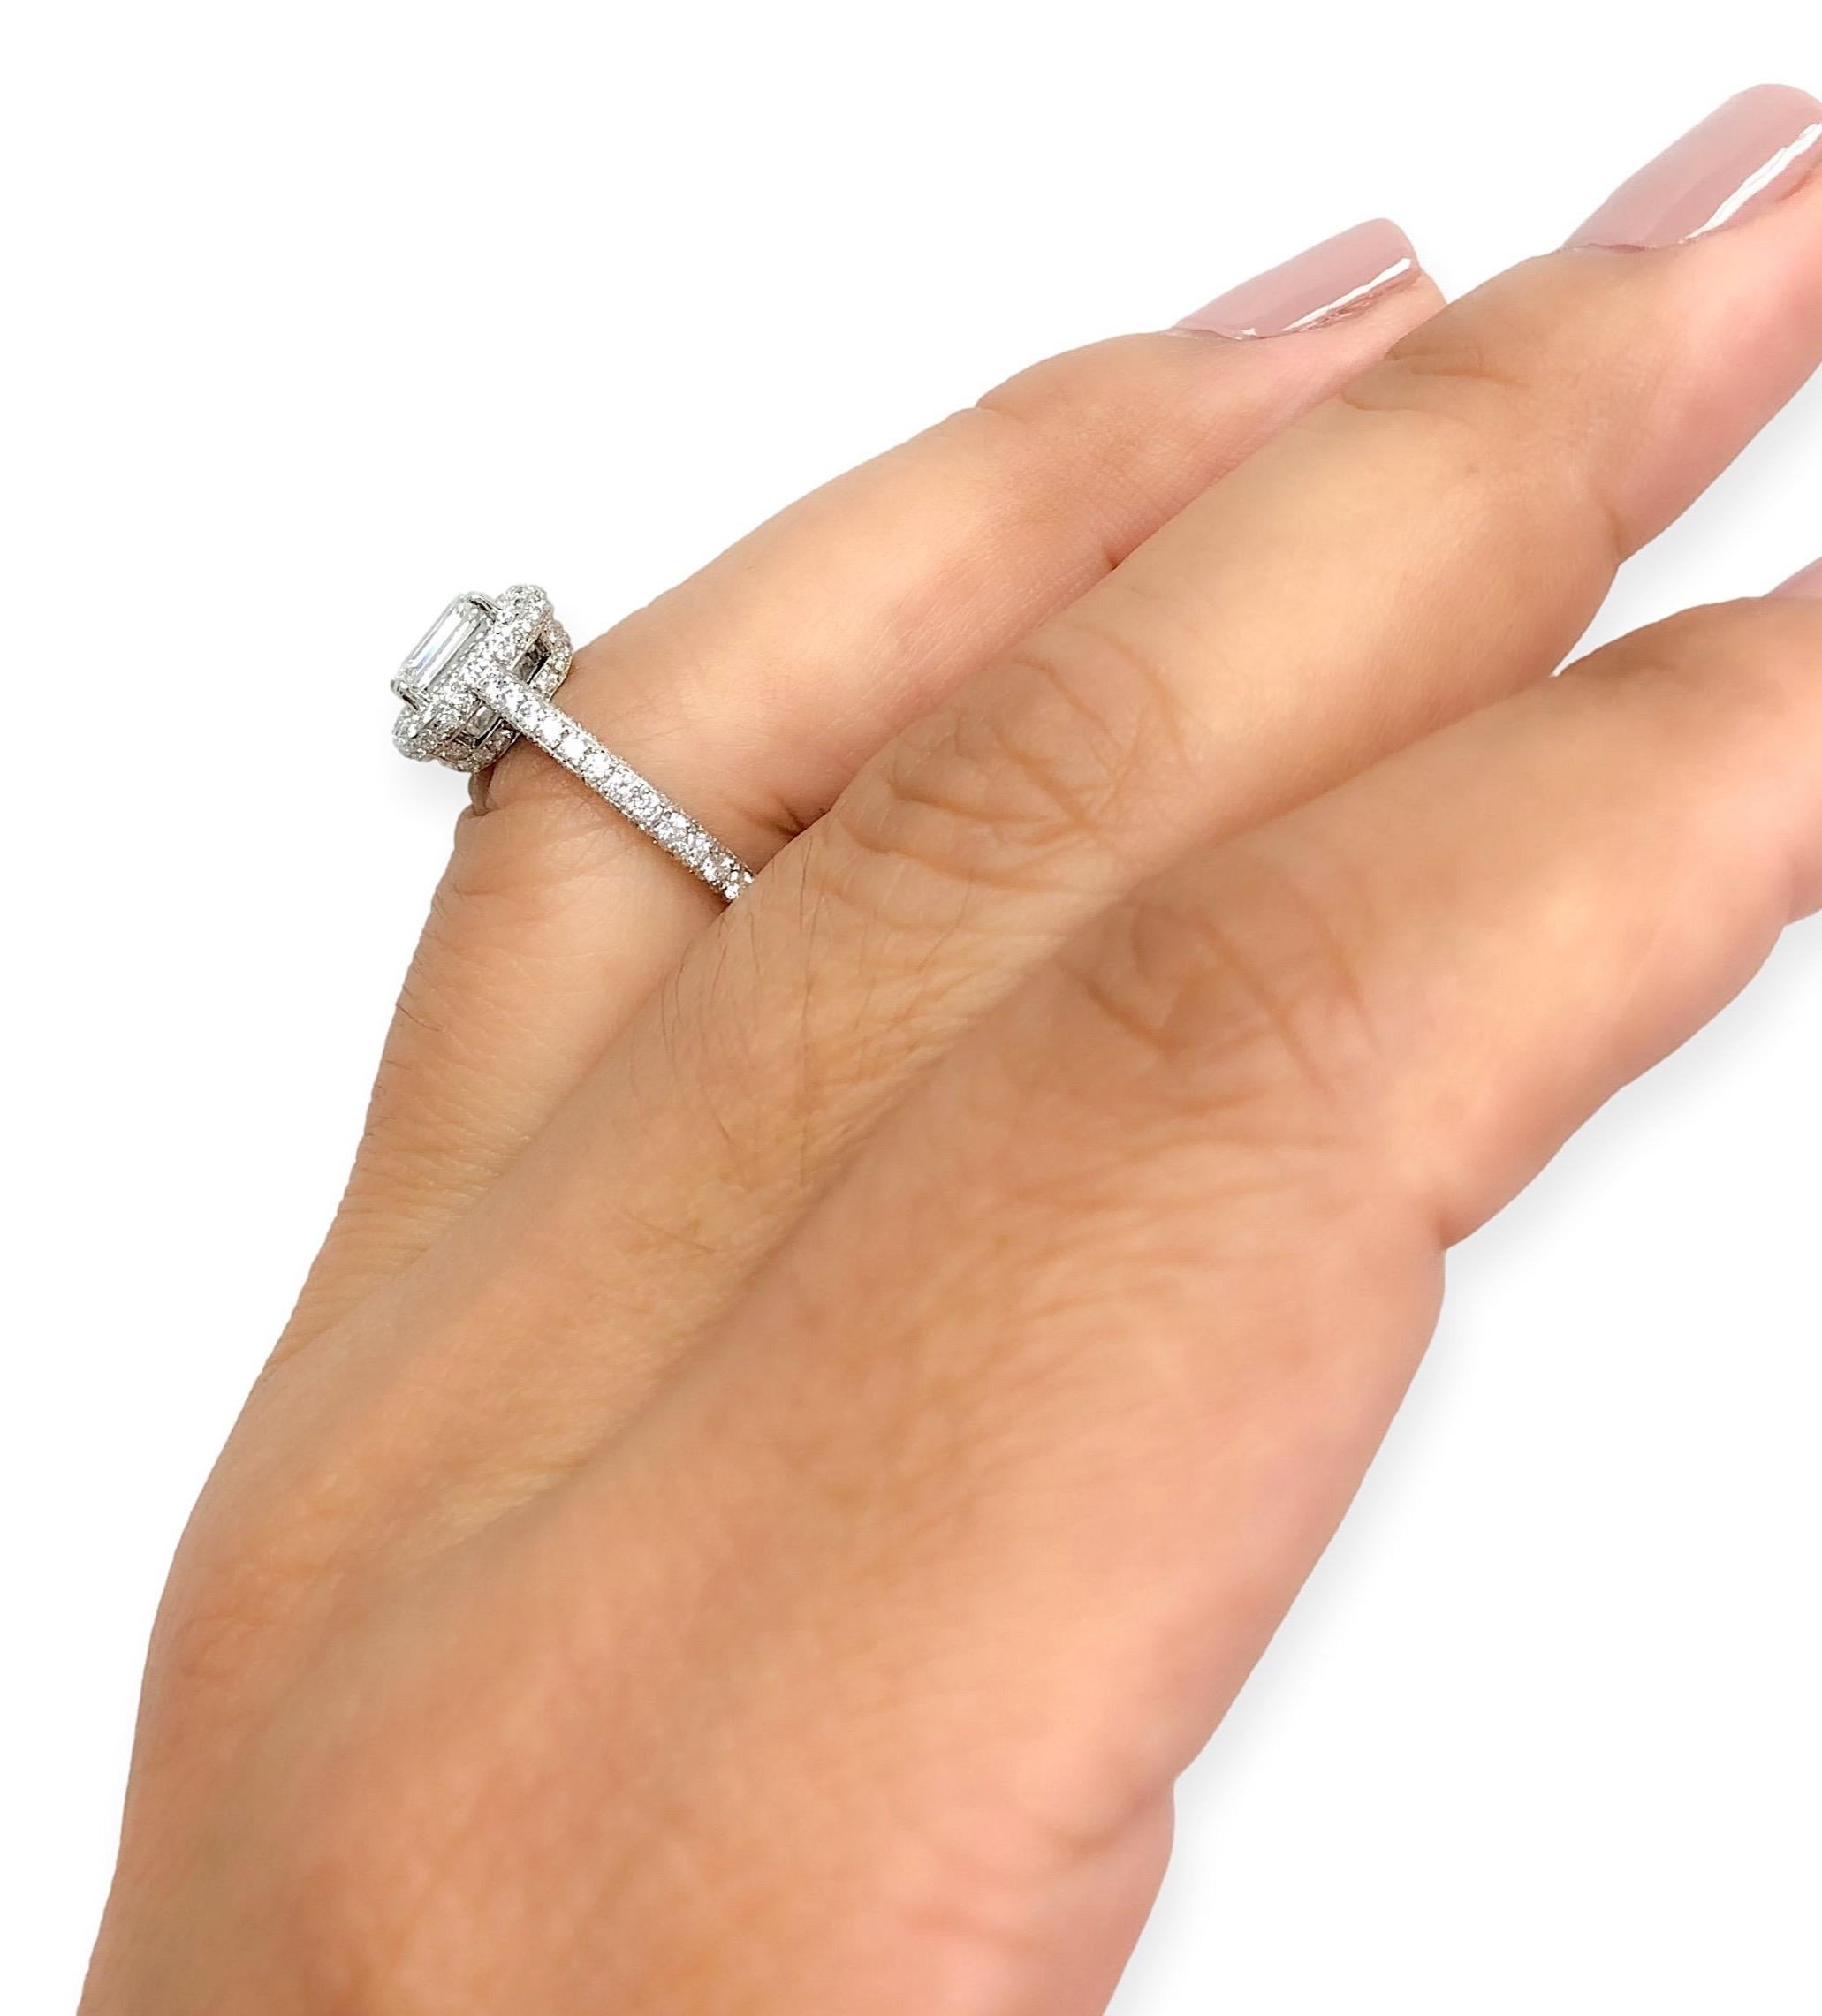 GRAFF 18K White Gold GIA Emerald Cut Diamond Engagement Ring  1.85 cts. TW F VS1 5